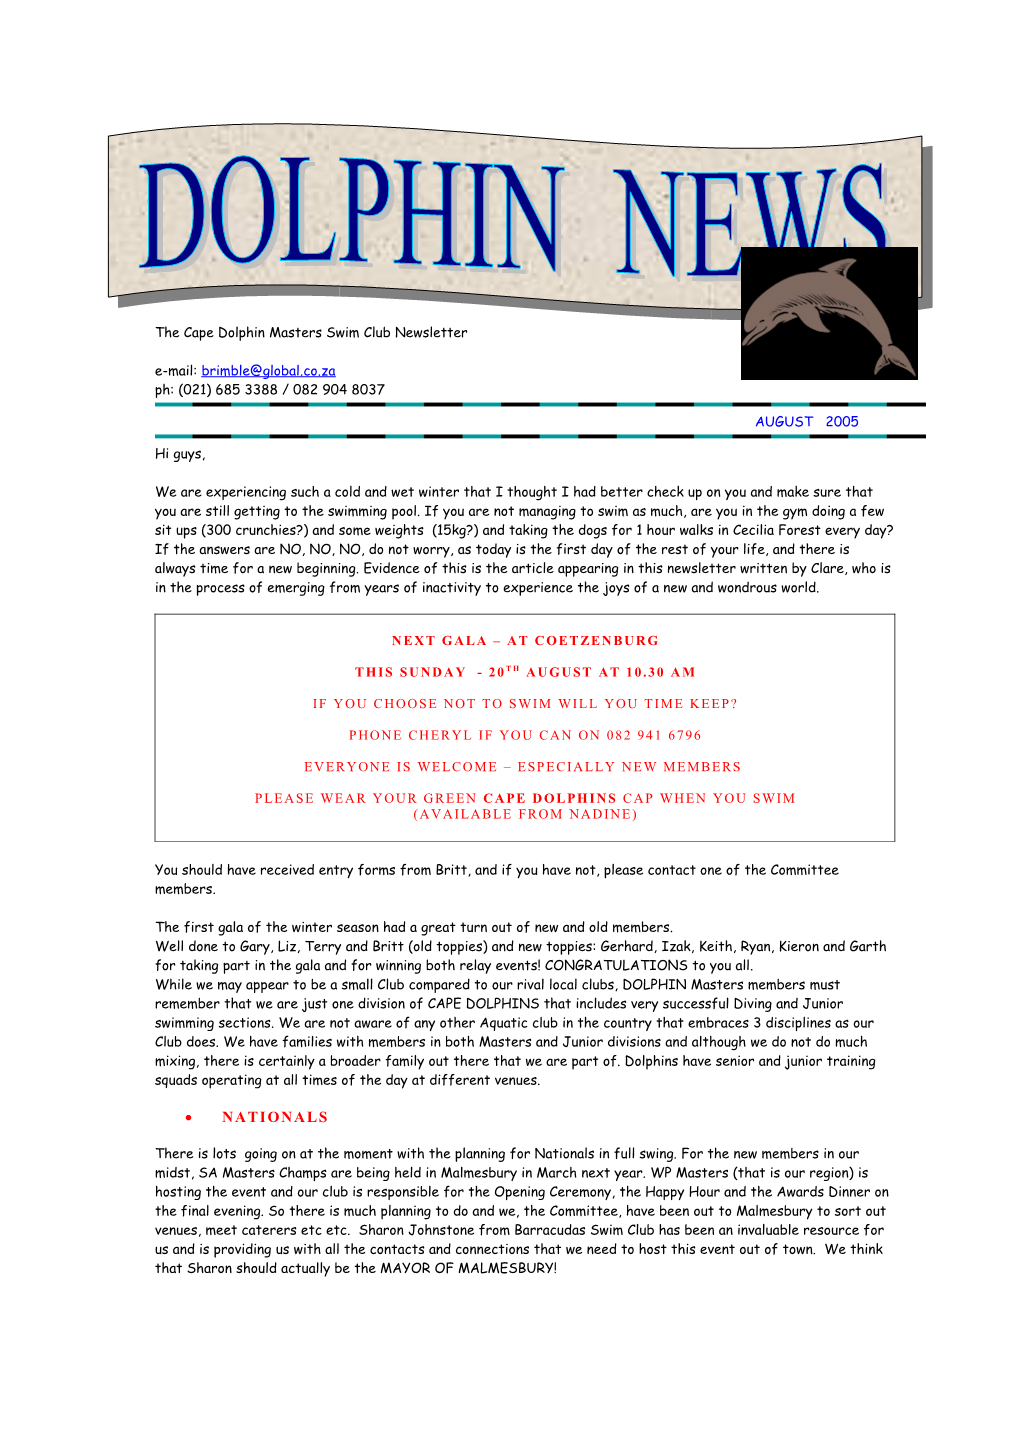 The Capedolphin Masters Swim Club Newsletter